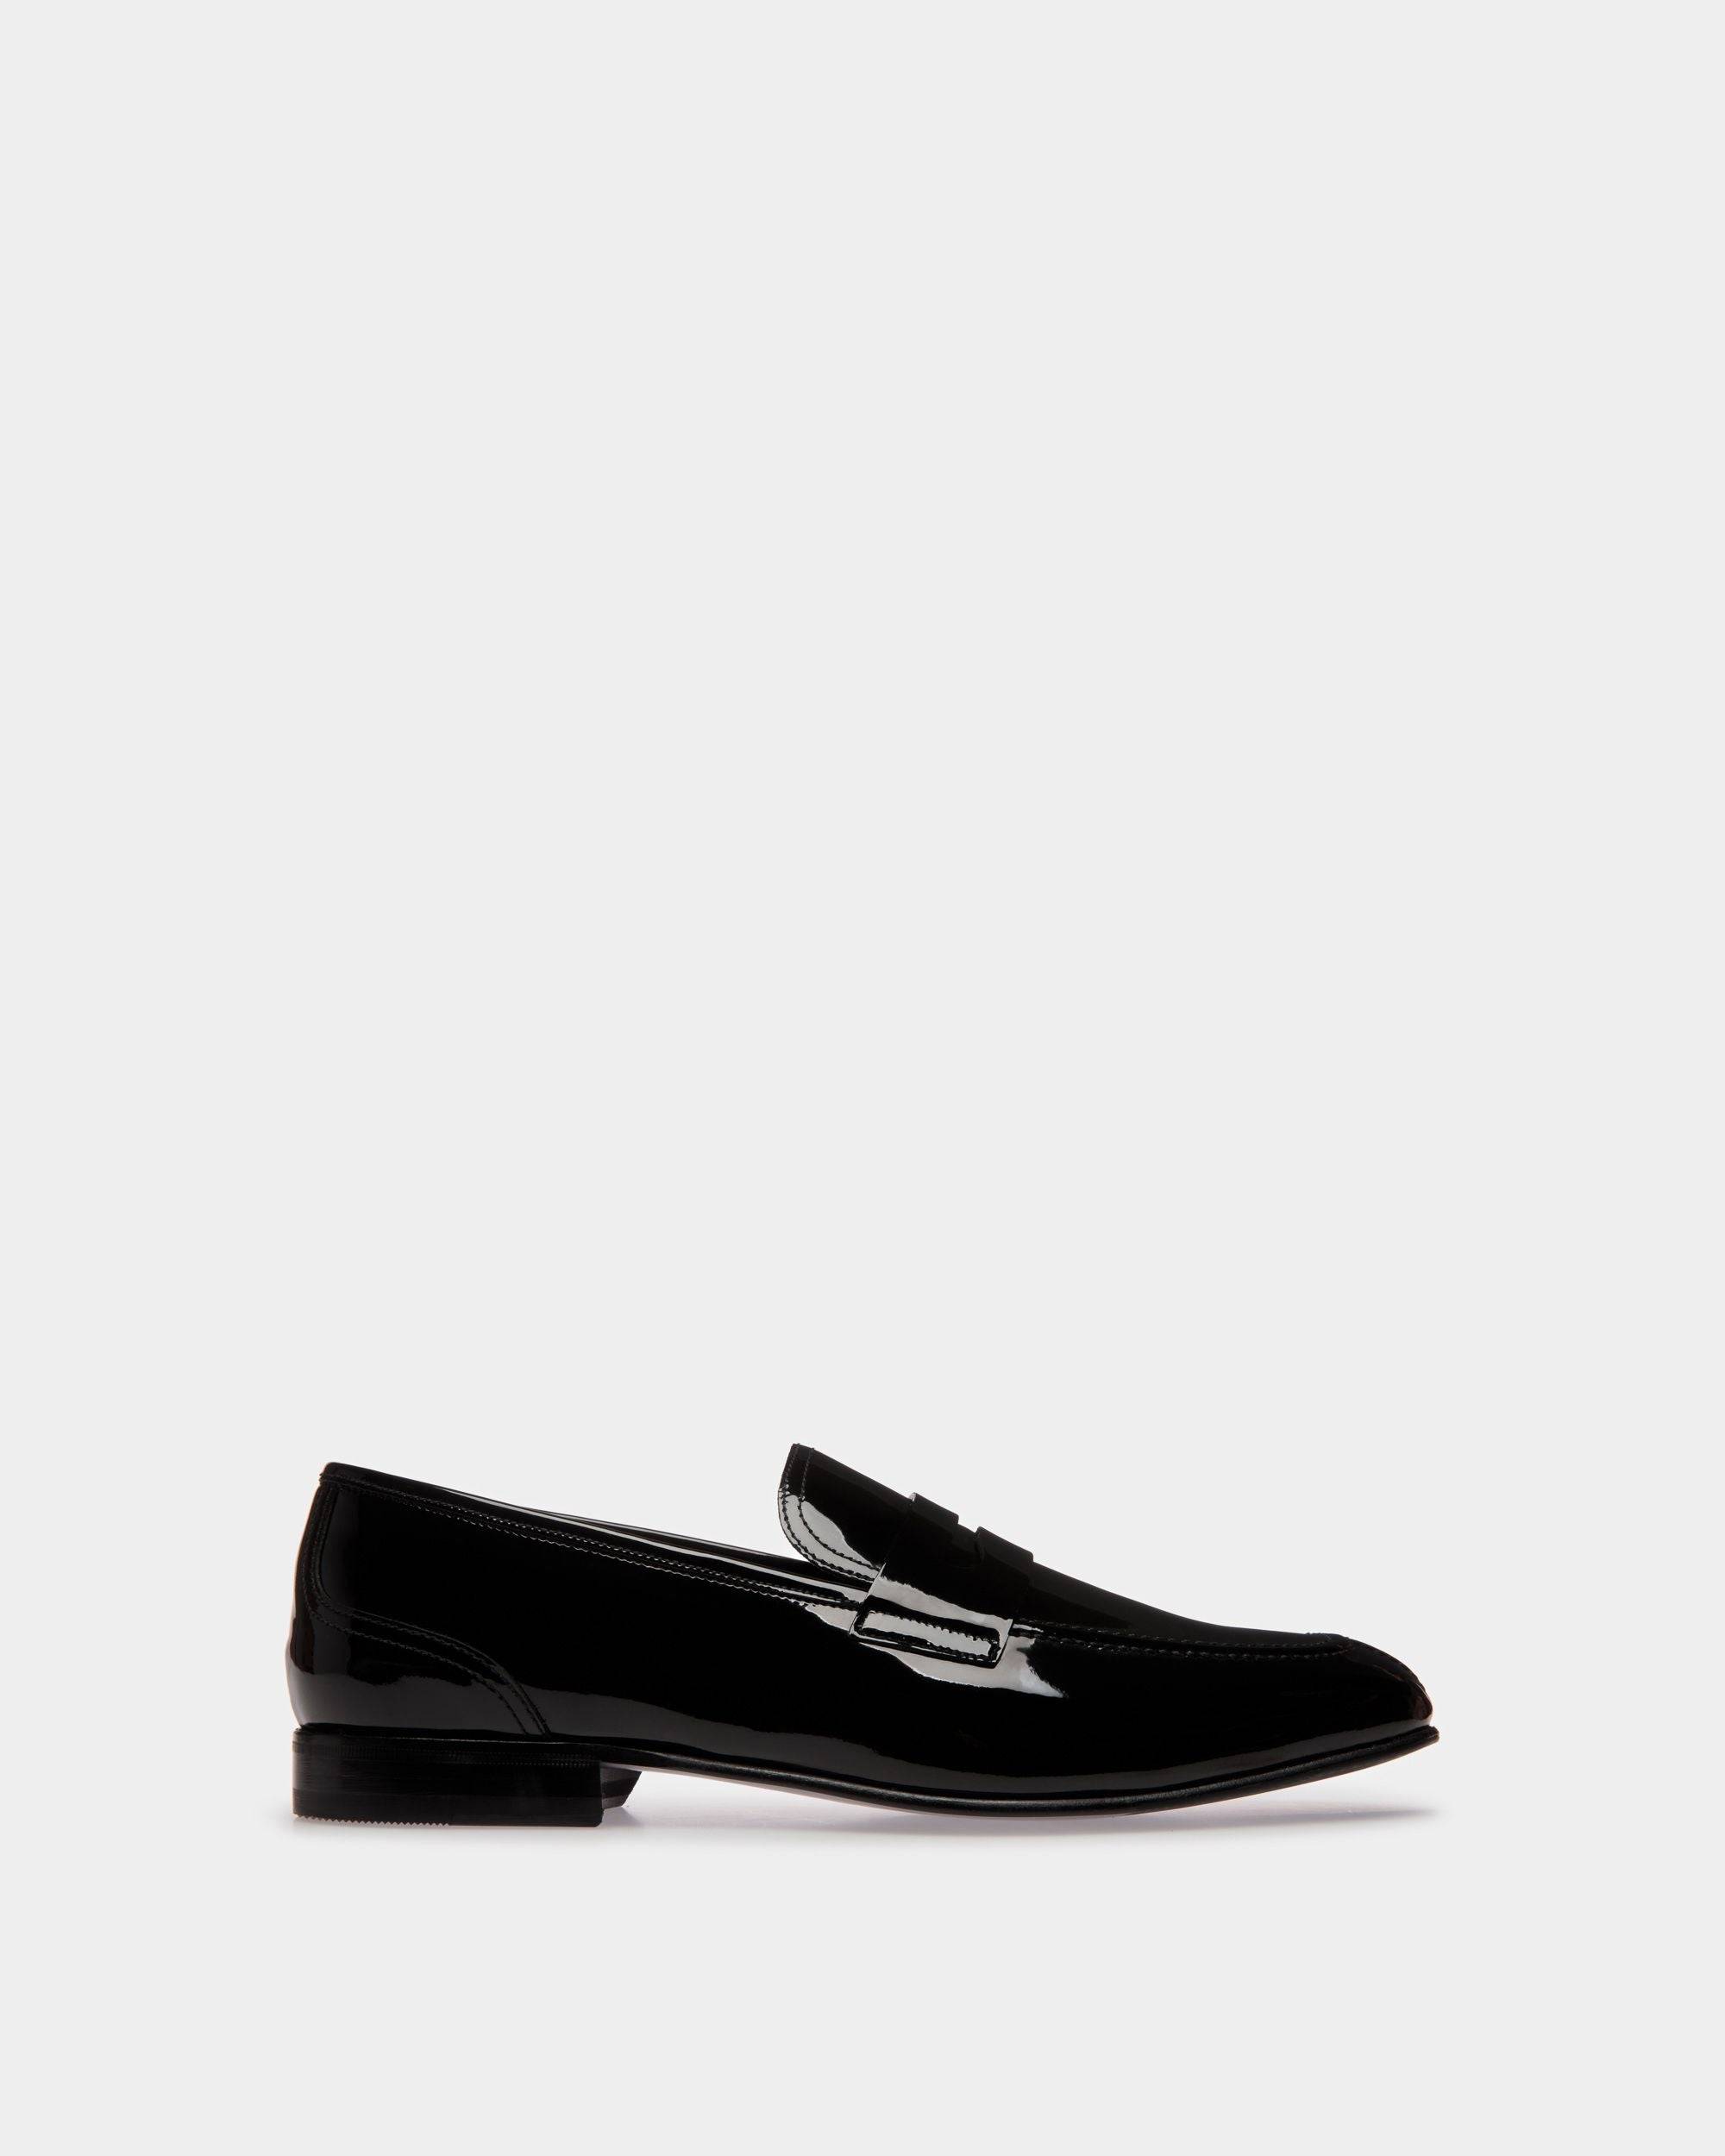 Men's Suisse Loafer in Black Patent Leather | Bally | Still Life Side